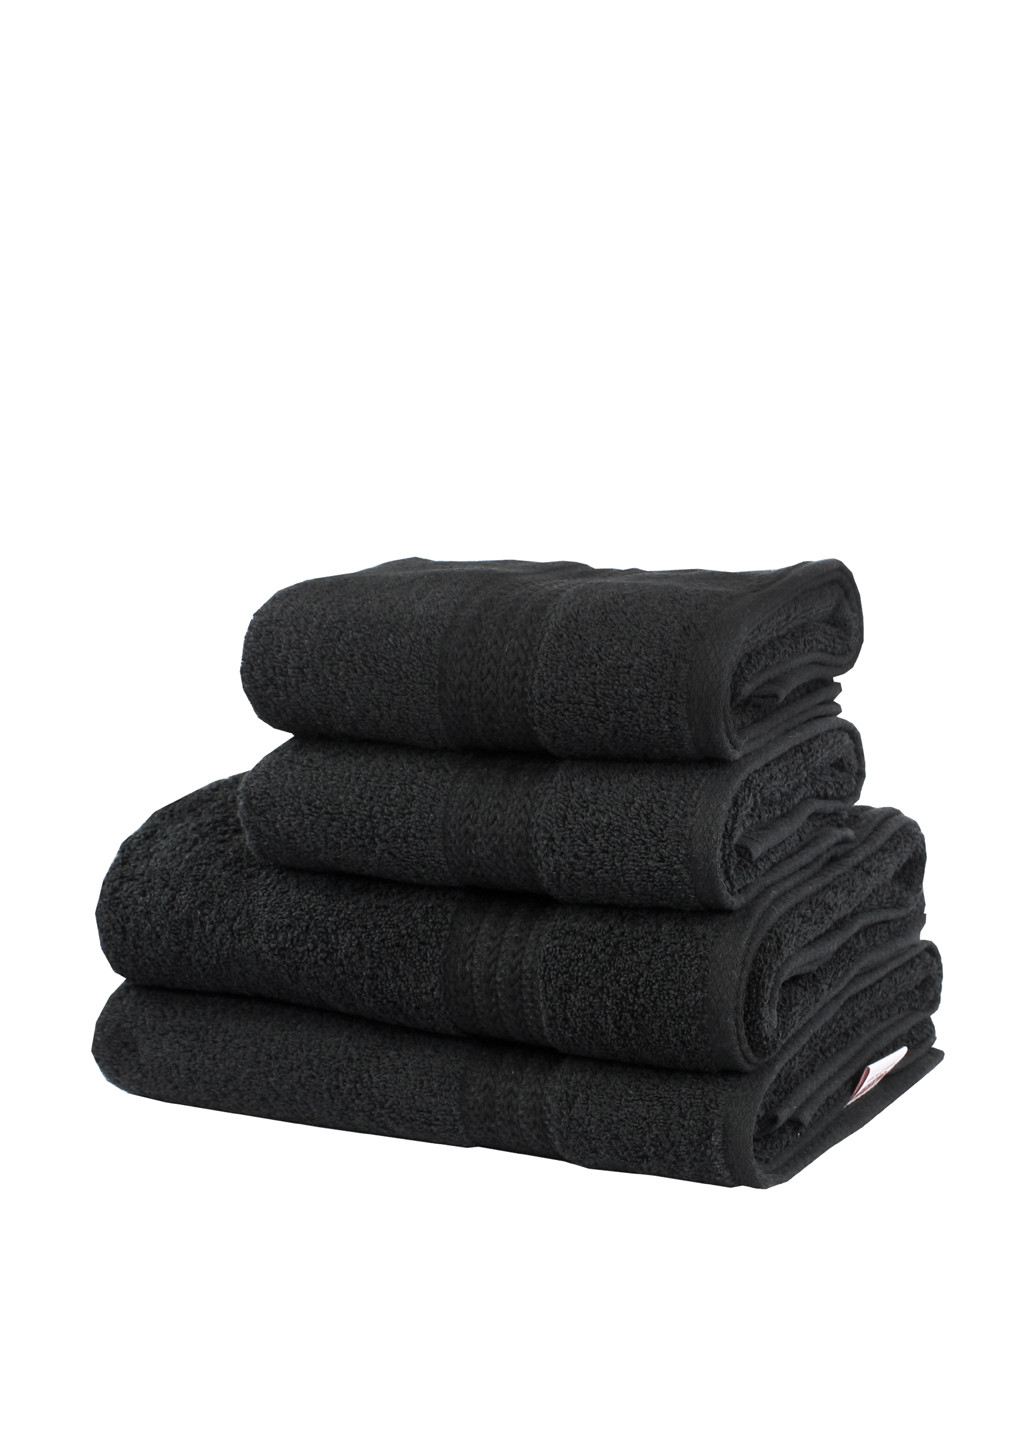 Hobby полотенце, 50х90 см однотонный черный производство - Турция